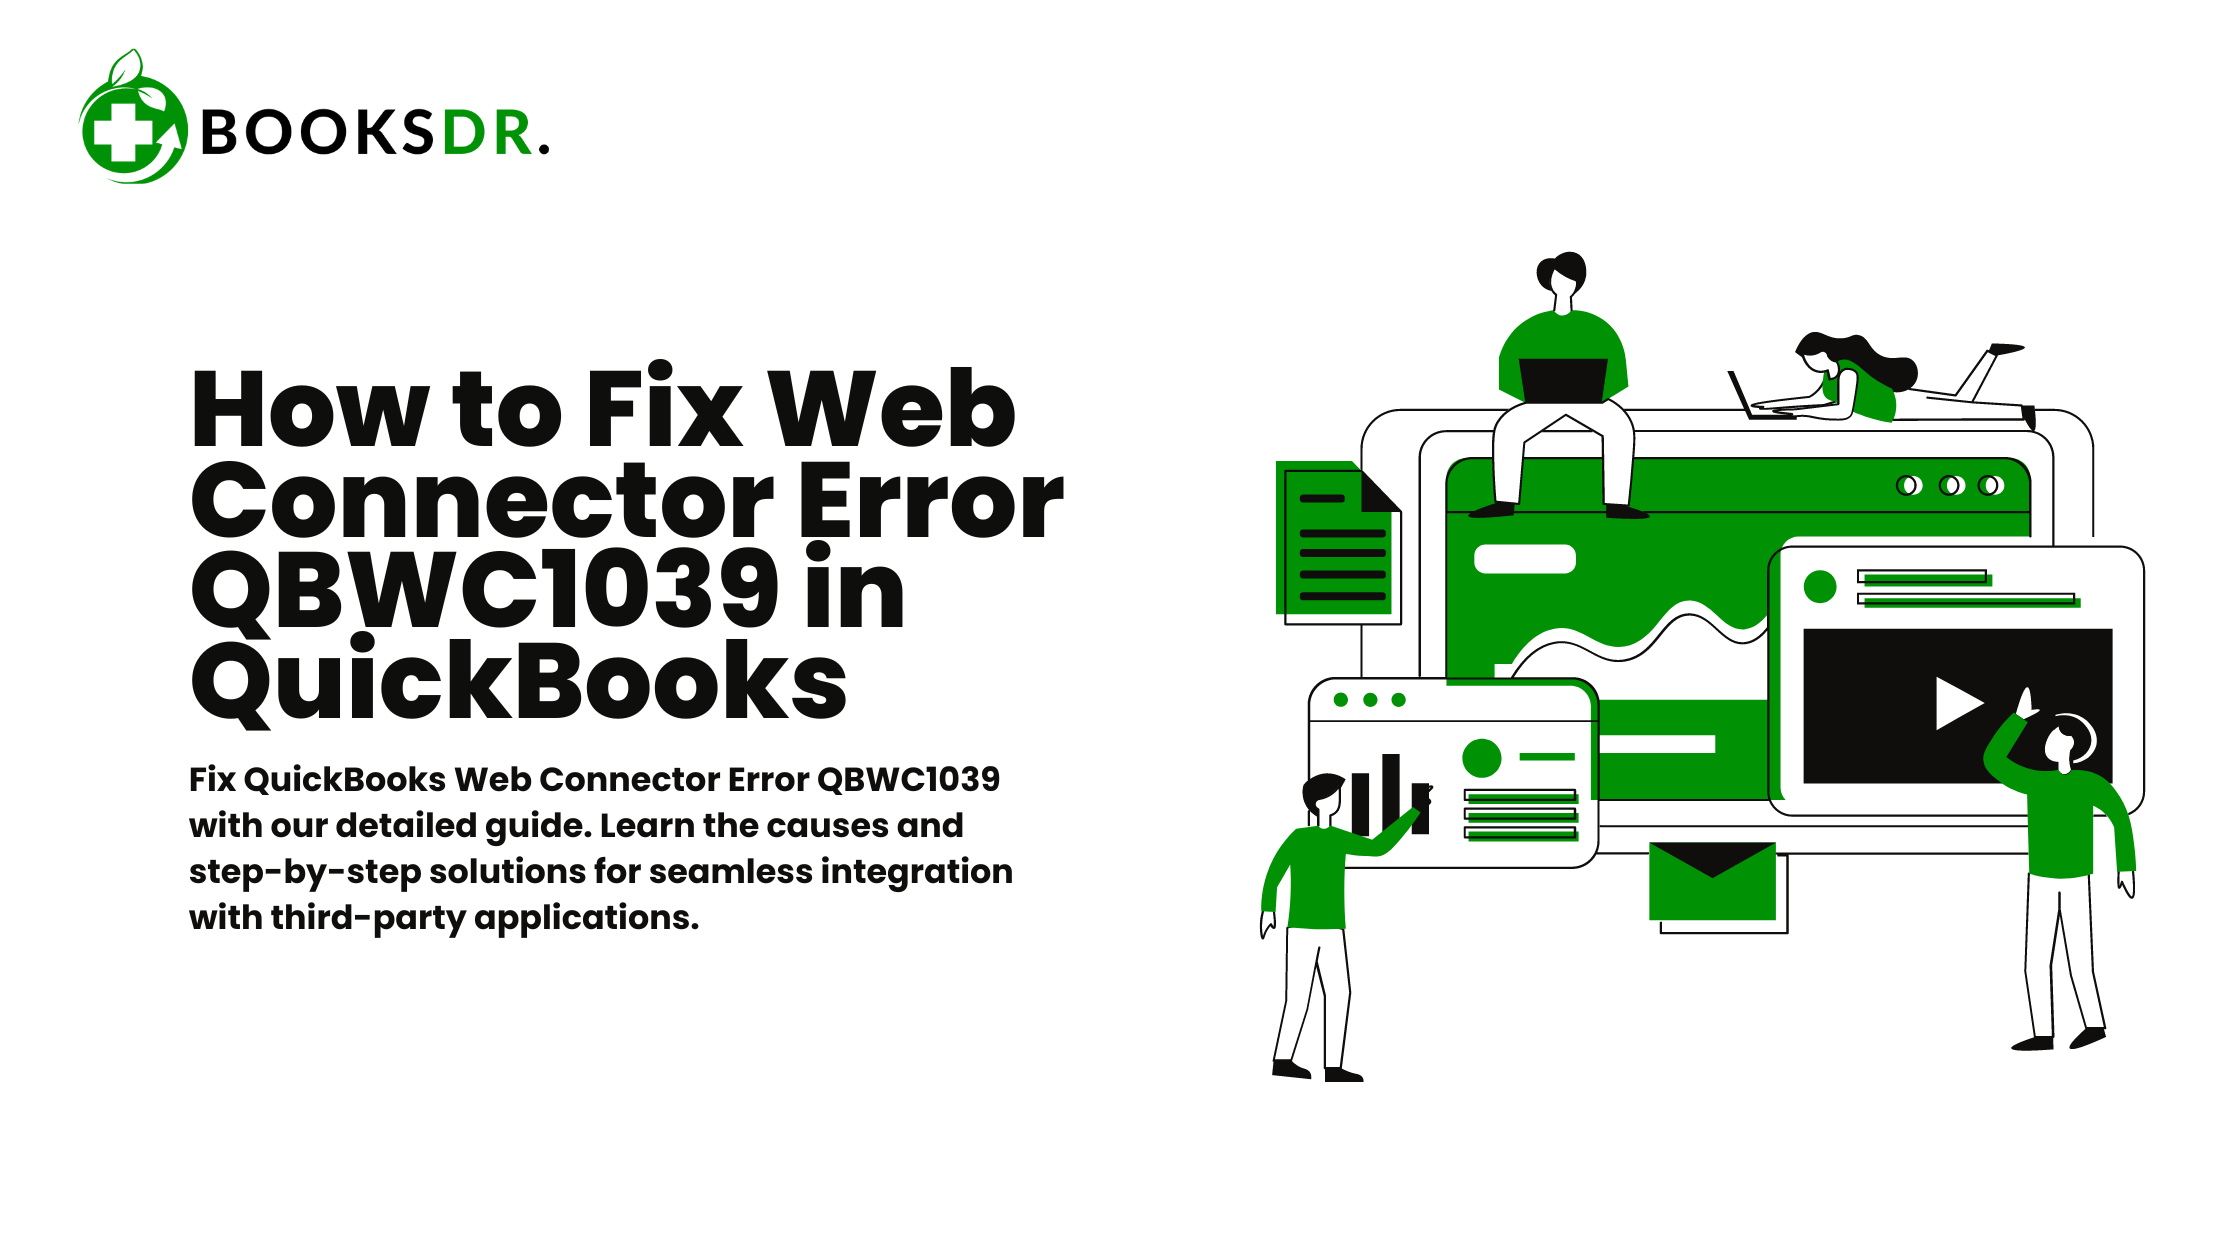 How to Fix Web Connector Error QBWC1039 in QuickBooks